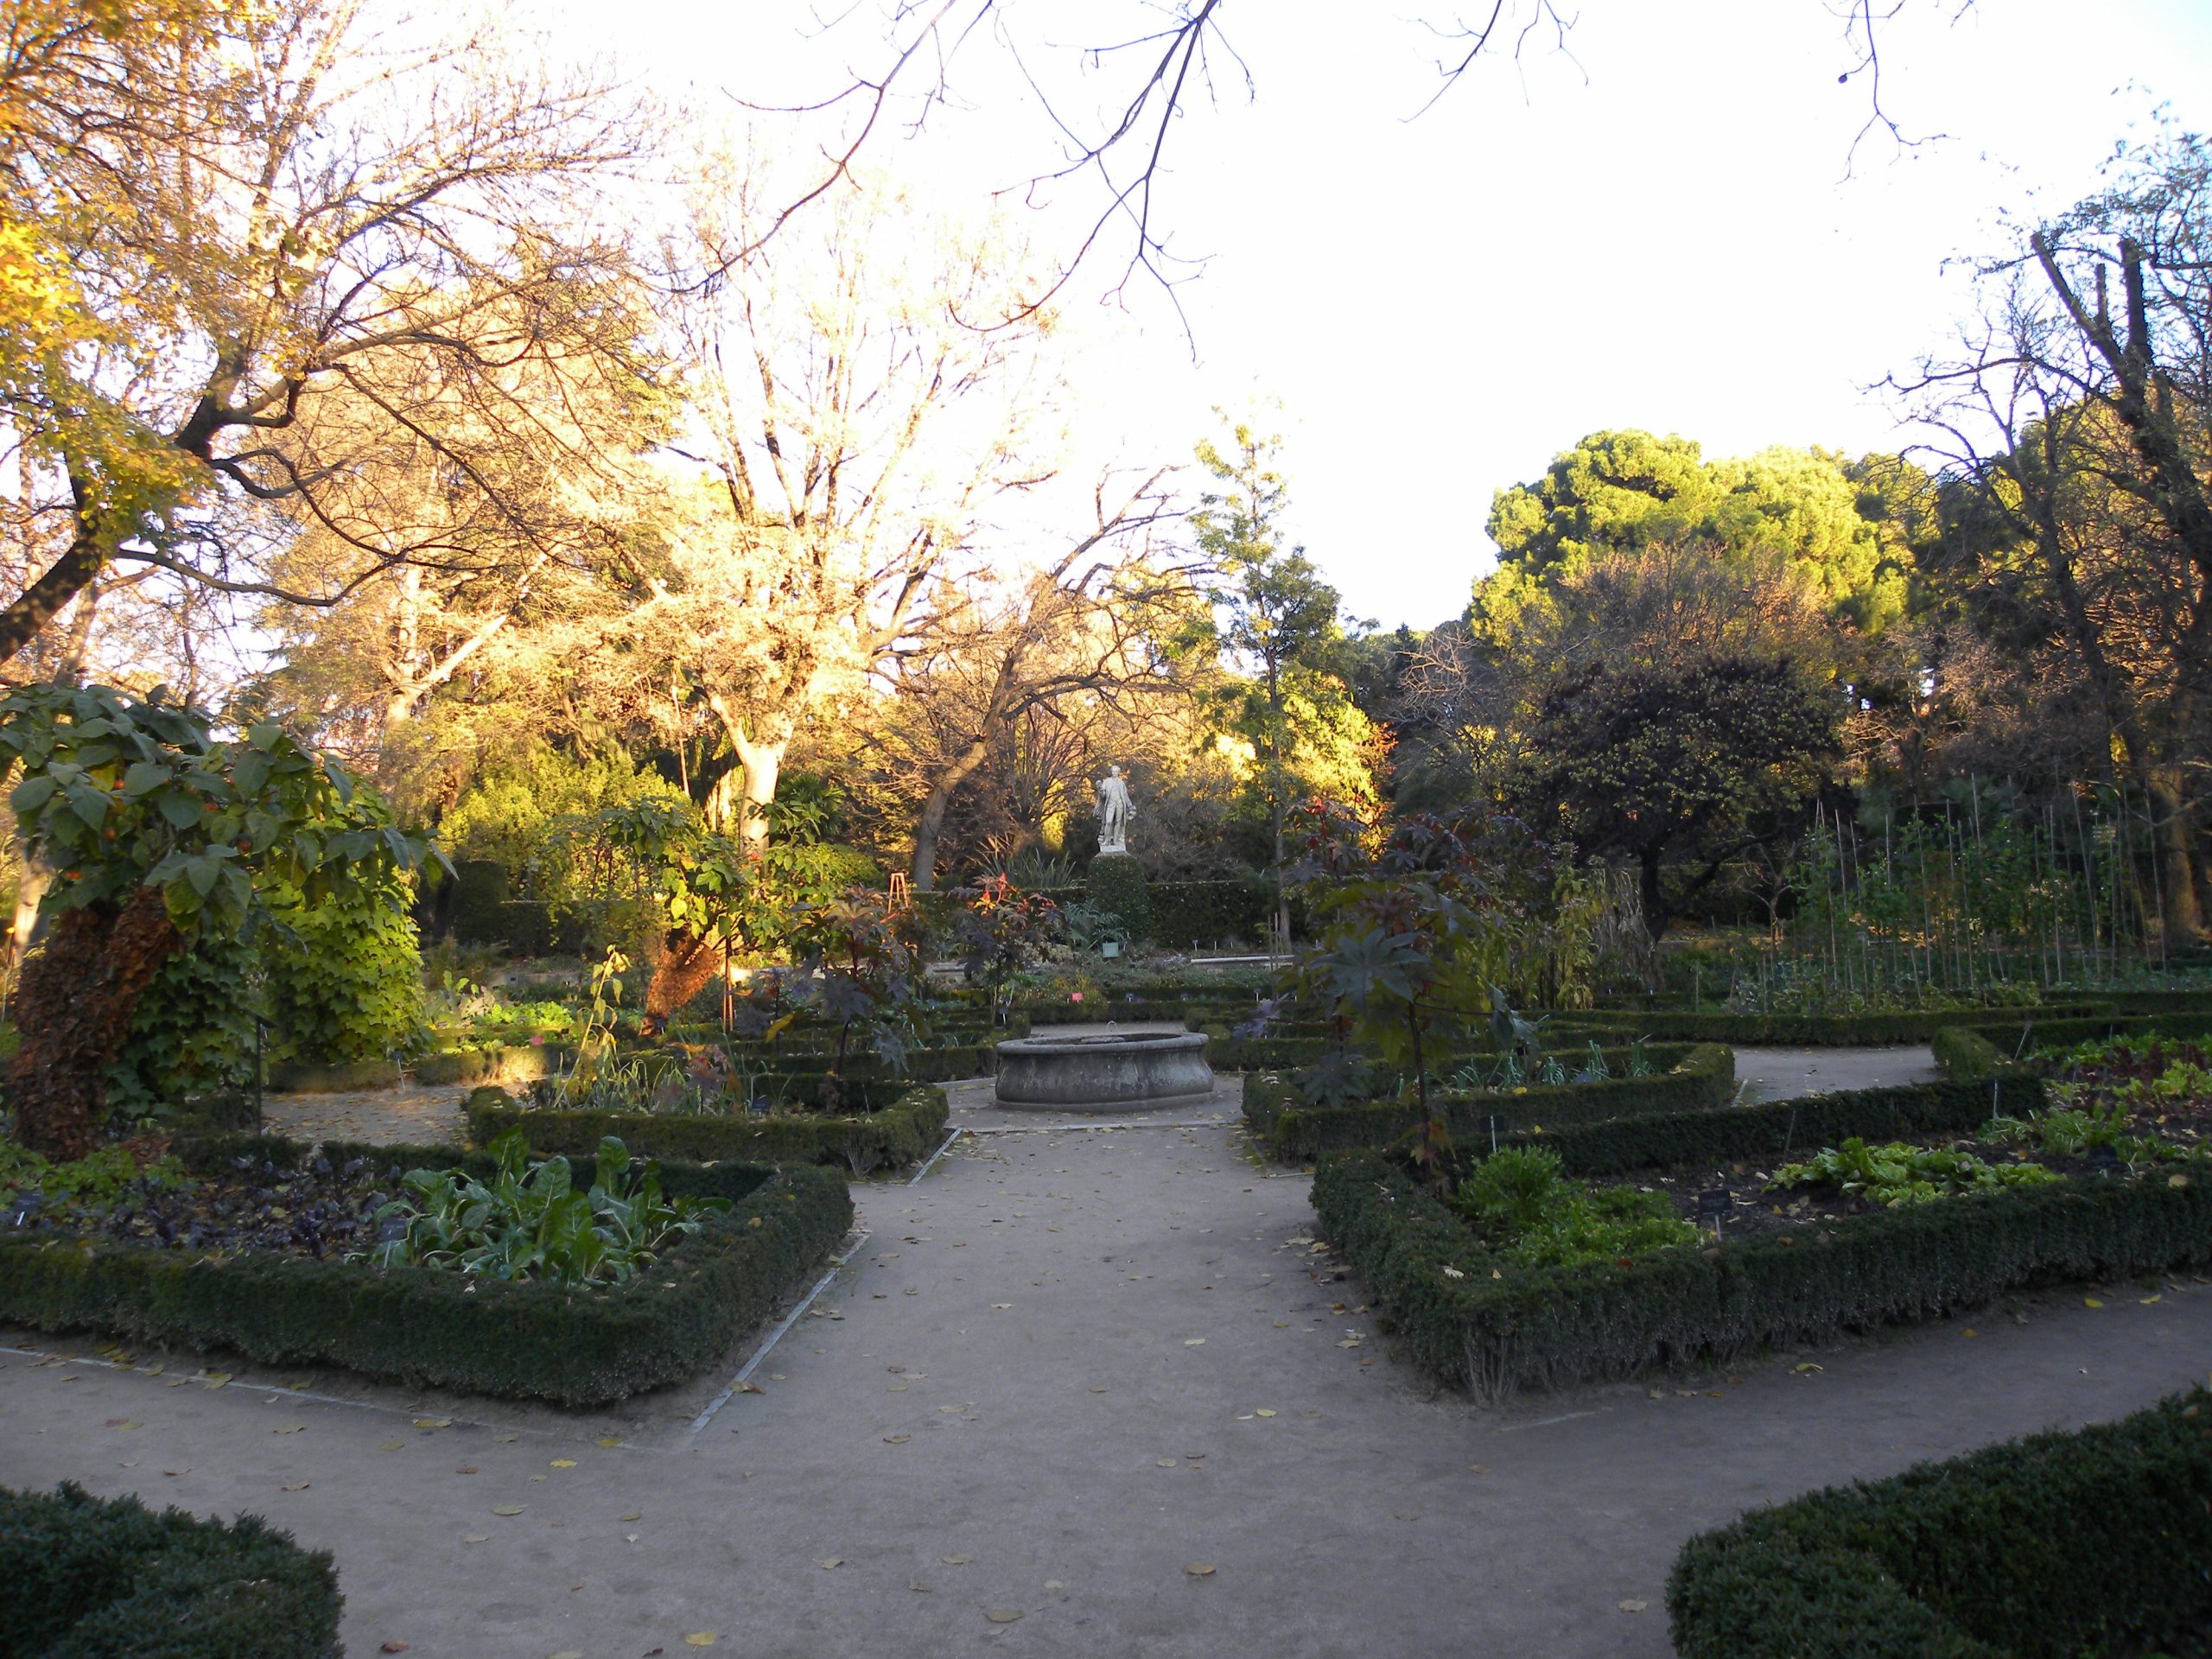 Real Jardín Botánico De Madrid | Real Jardin Botanico ... dedans Real Jardin Botanico